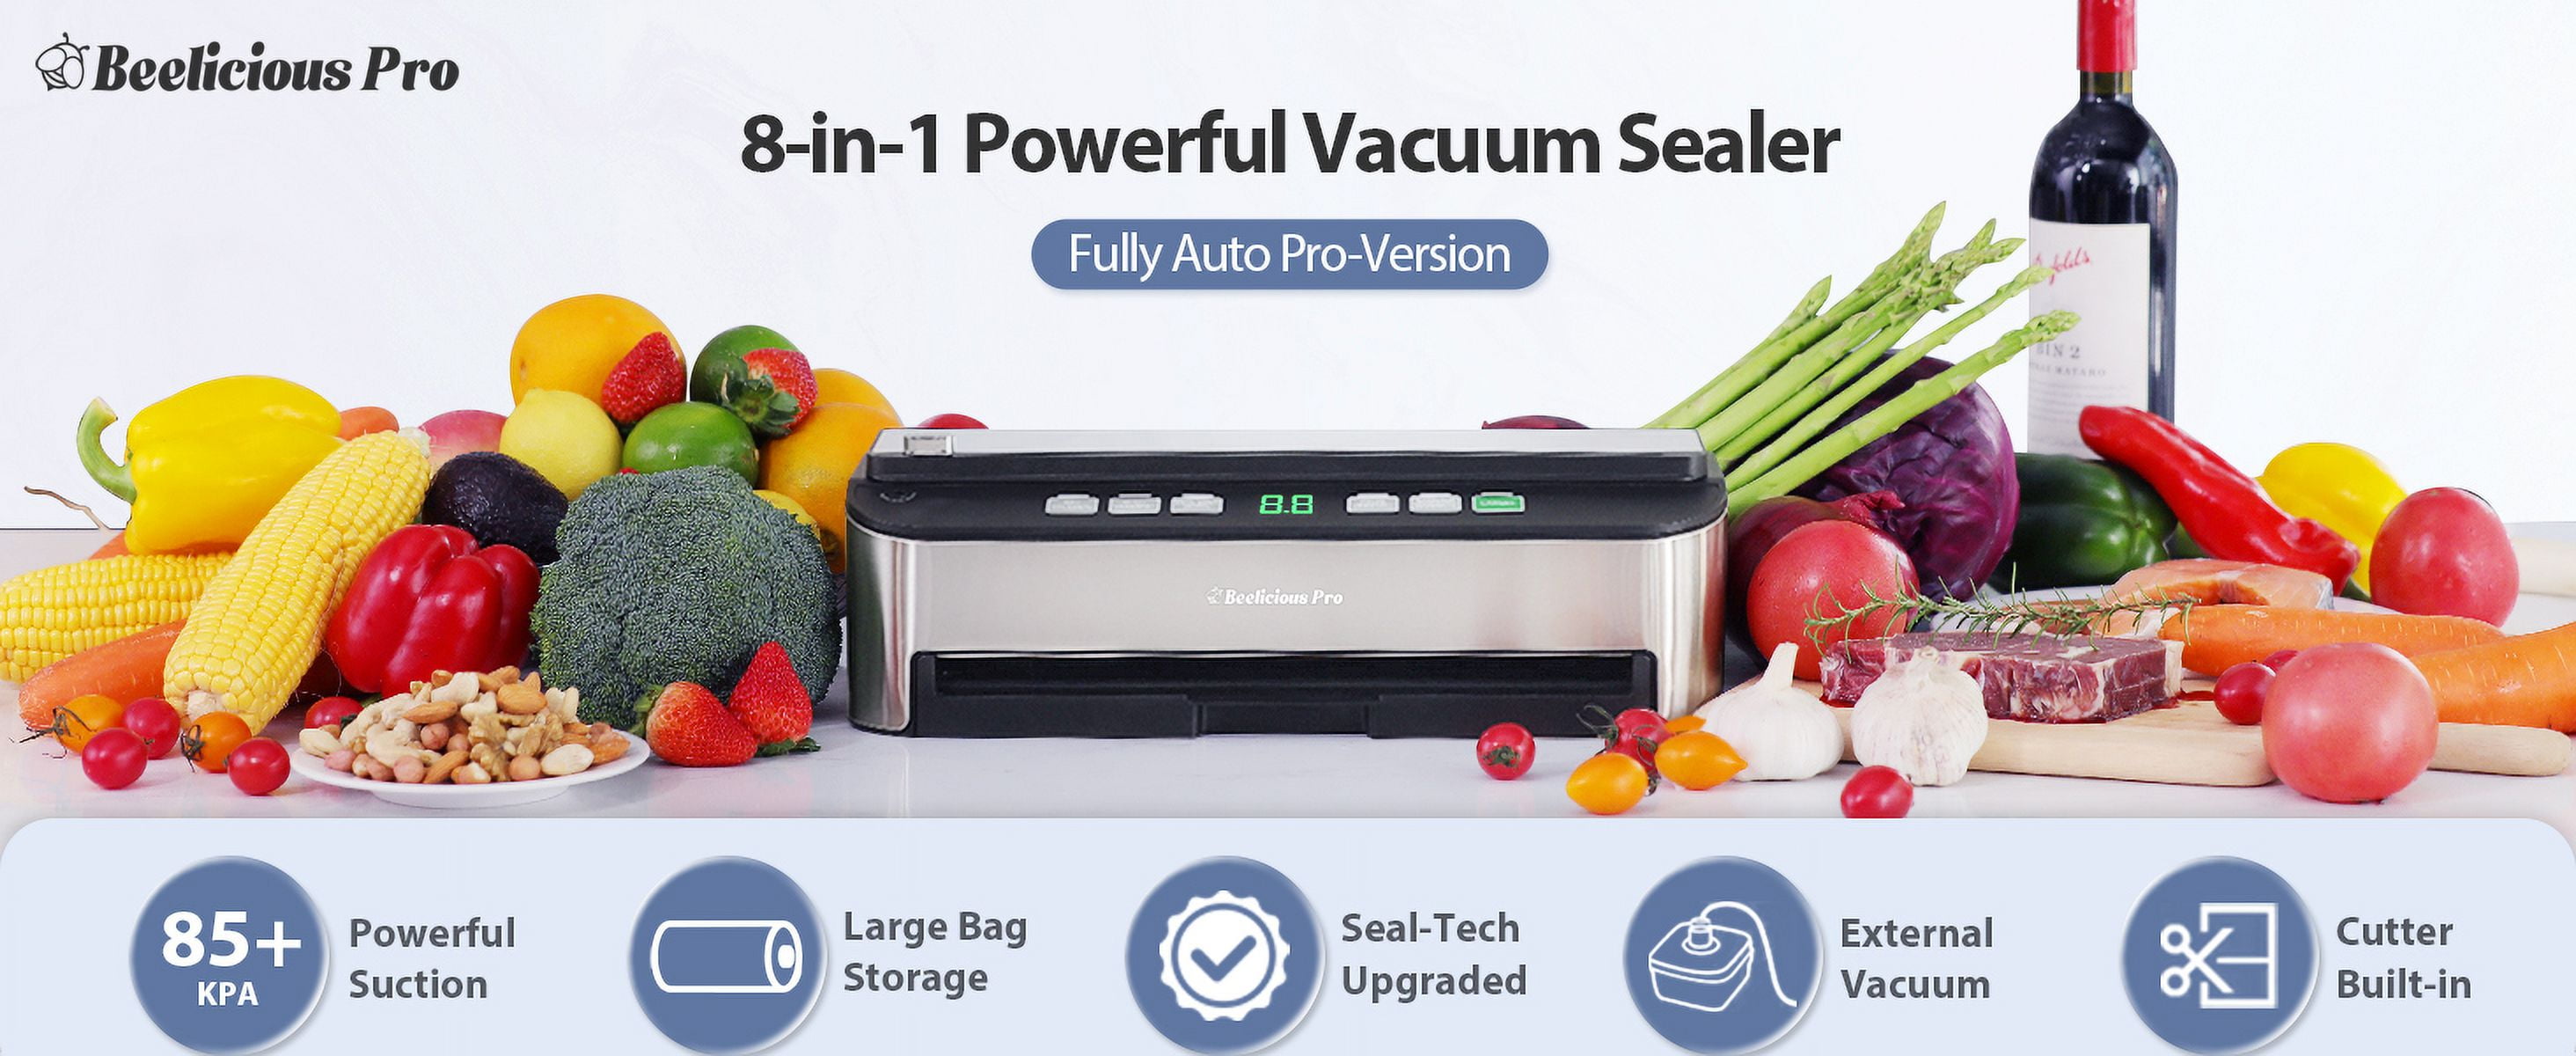  Beelicious Vacuum Sealer: Home & Kitchen